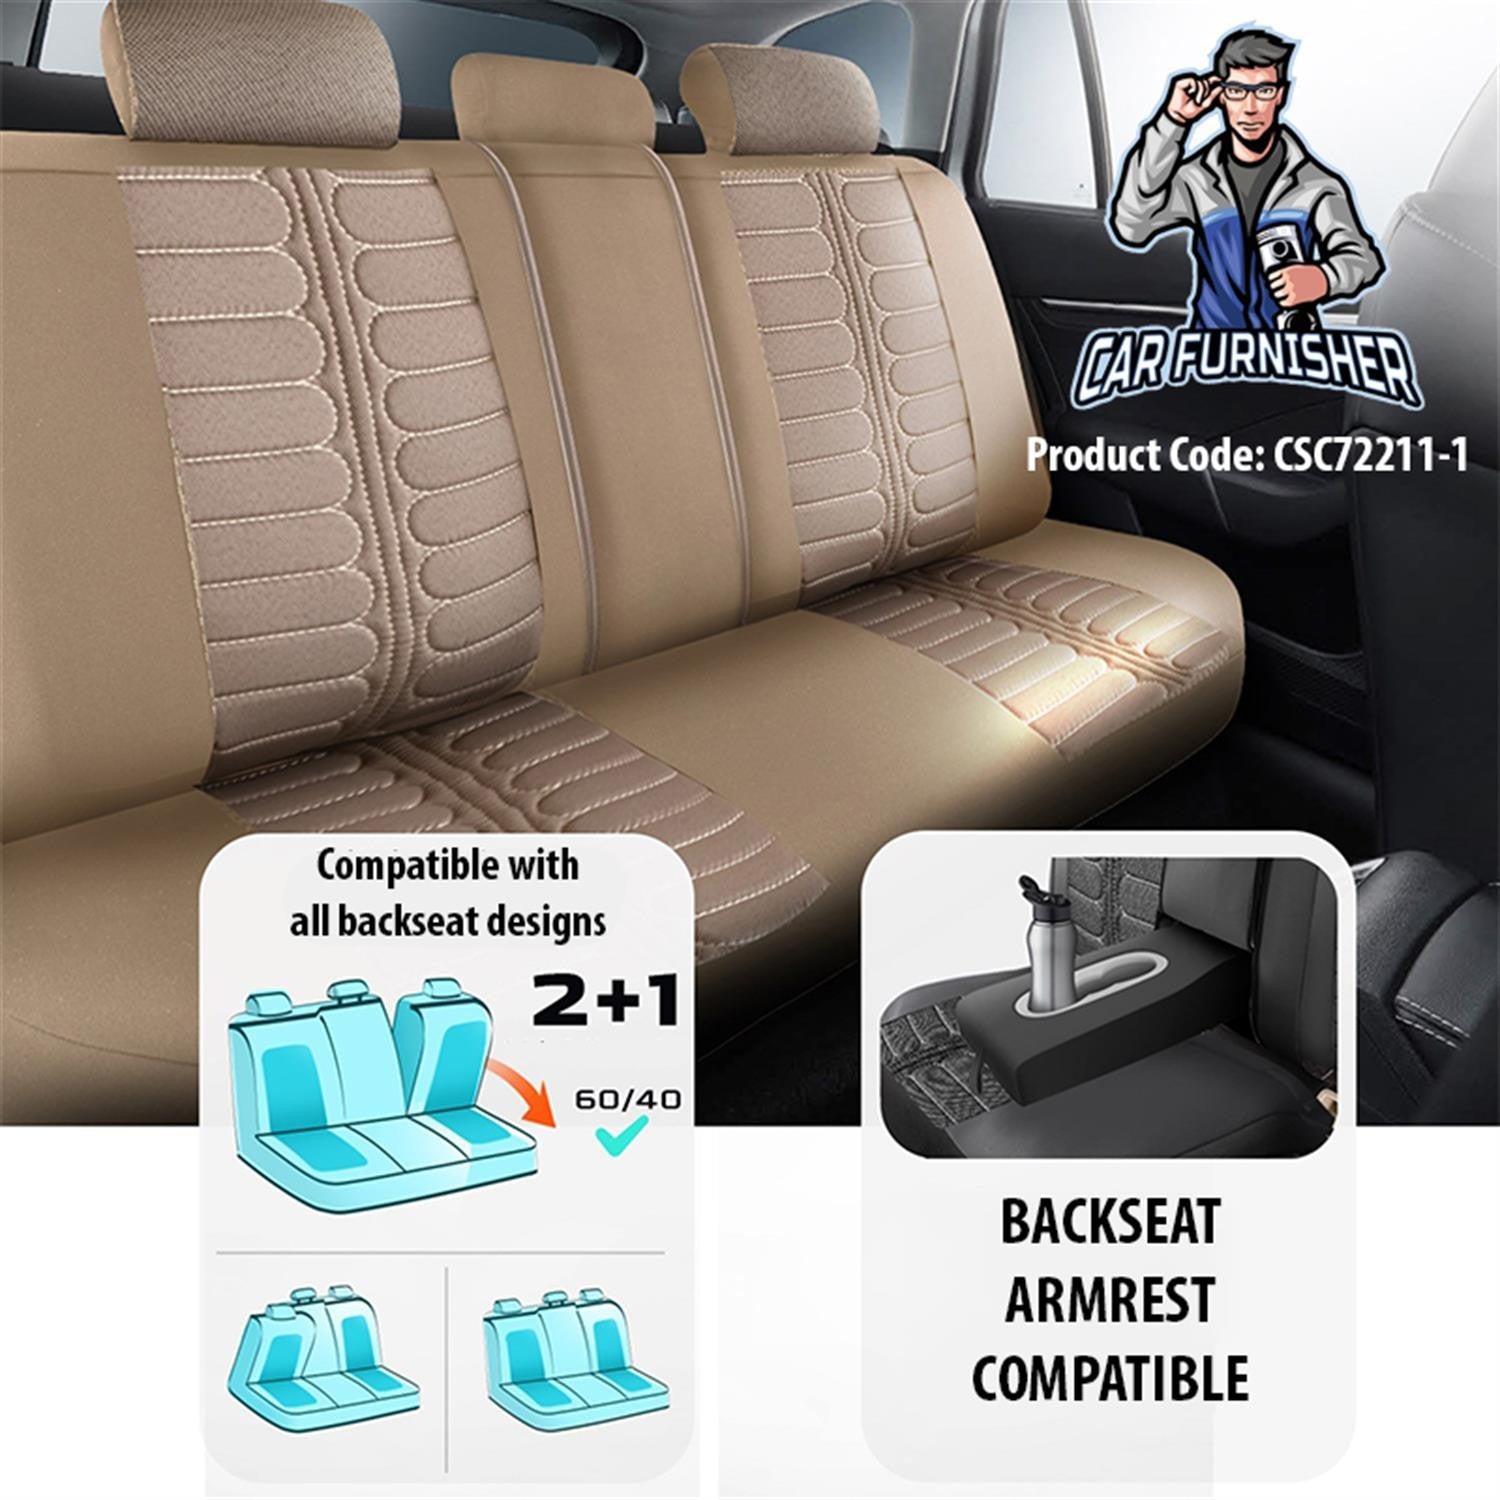 Mercedes 190 Seat Covers London Design Beige 5 Seats + Headrests (Full Set) Leather & Jacquard Fabric